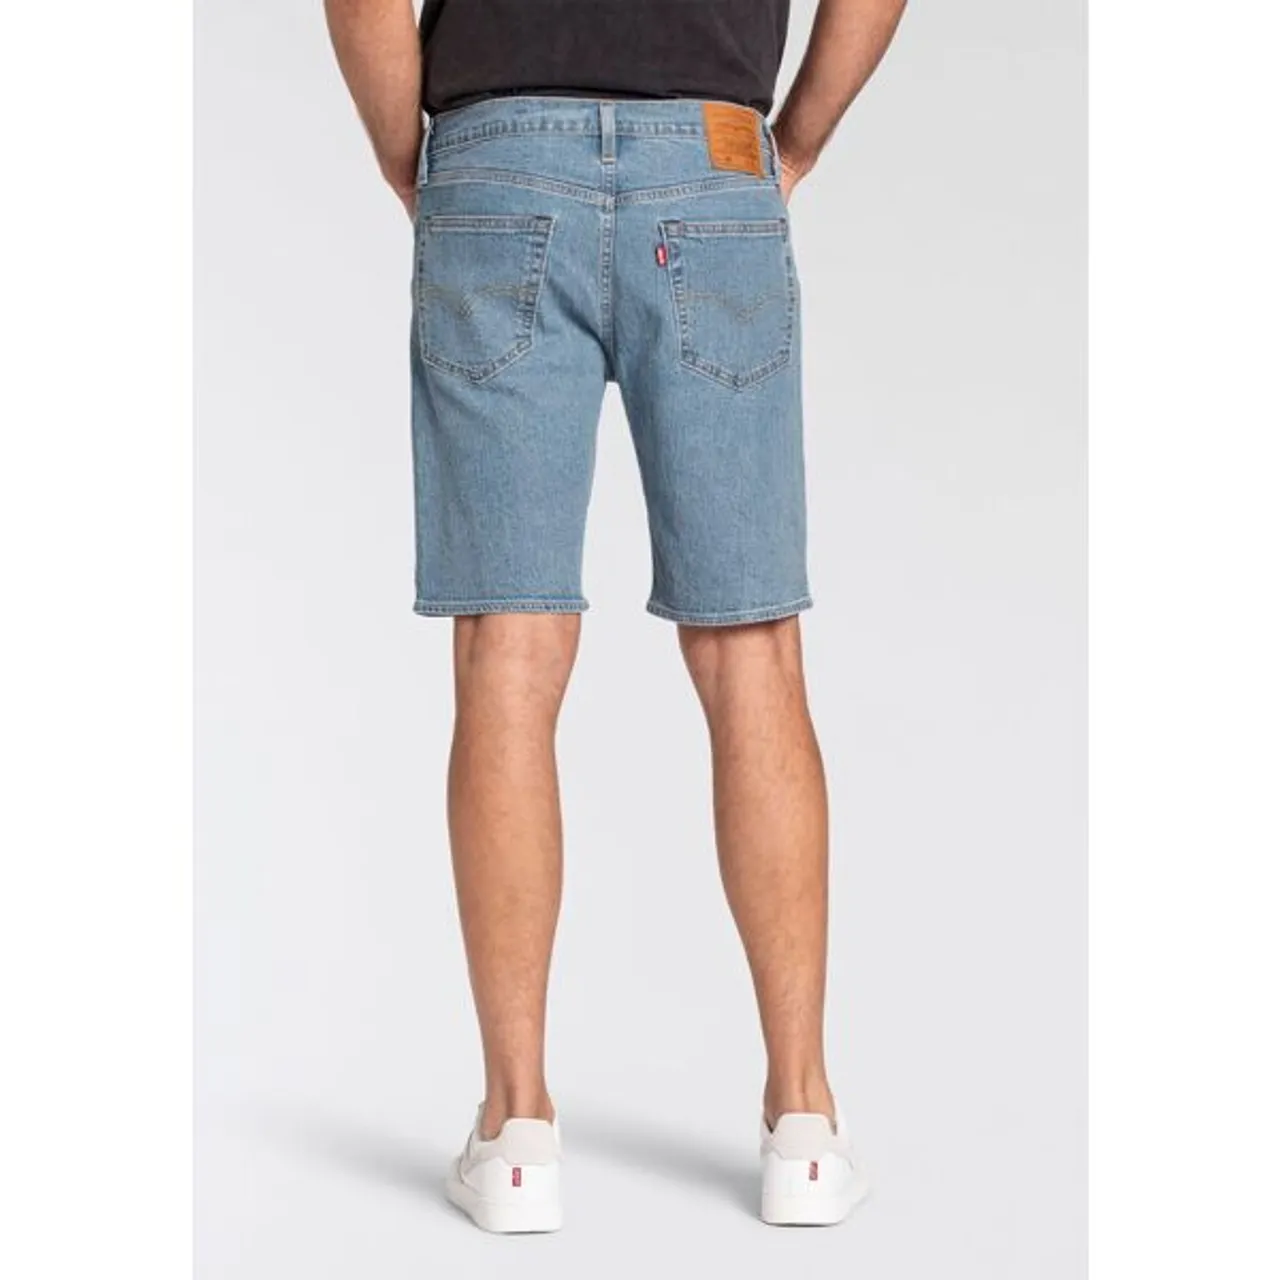 Jeansshorts LEVI'S "405" Gr. 31, N-Gr, blau (stone rock cool shor) Herren Jeans Shorts